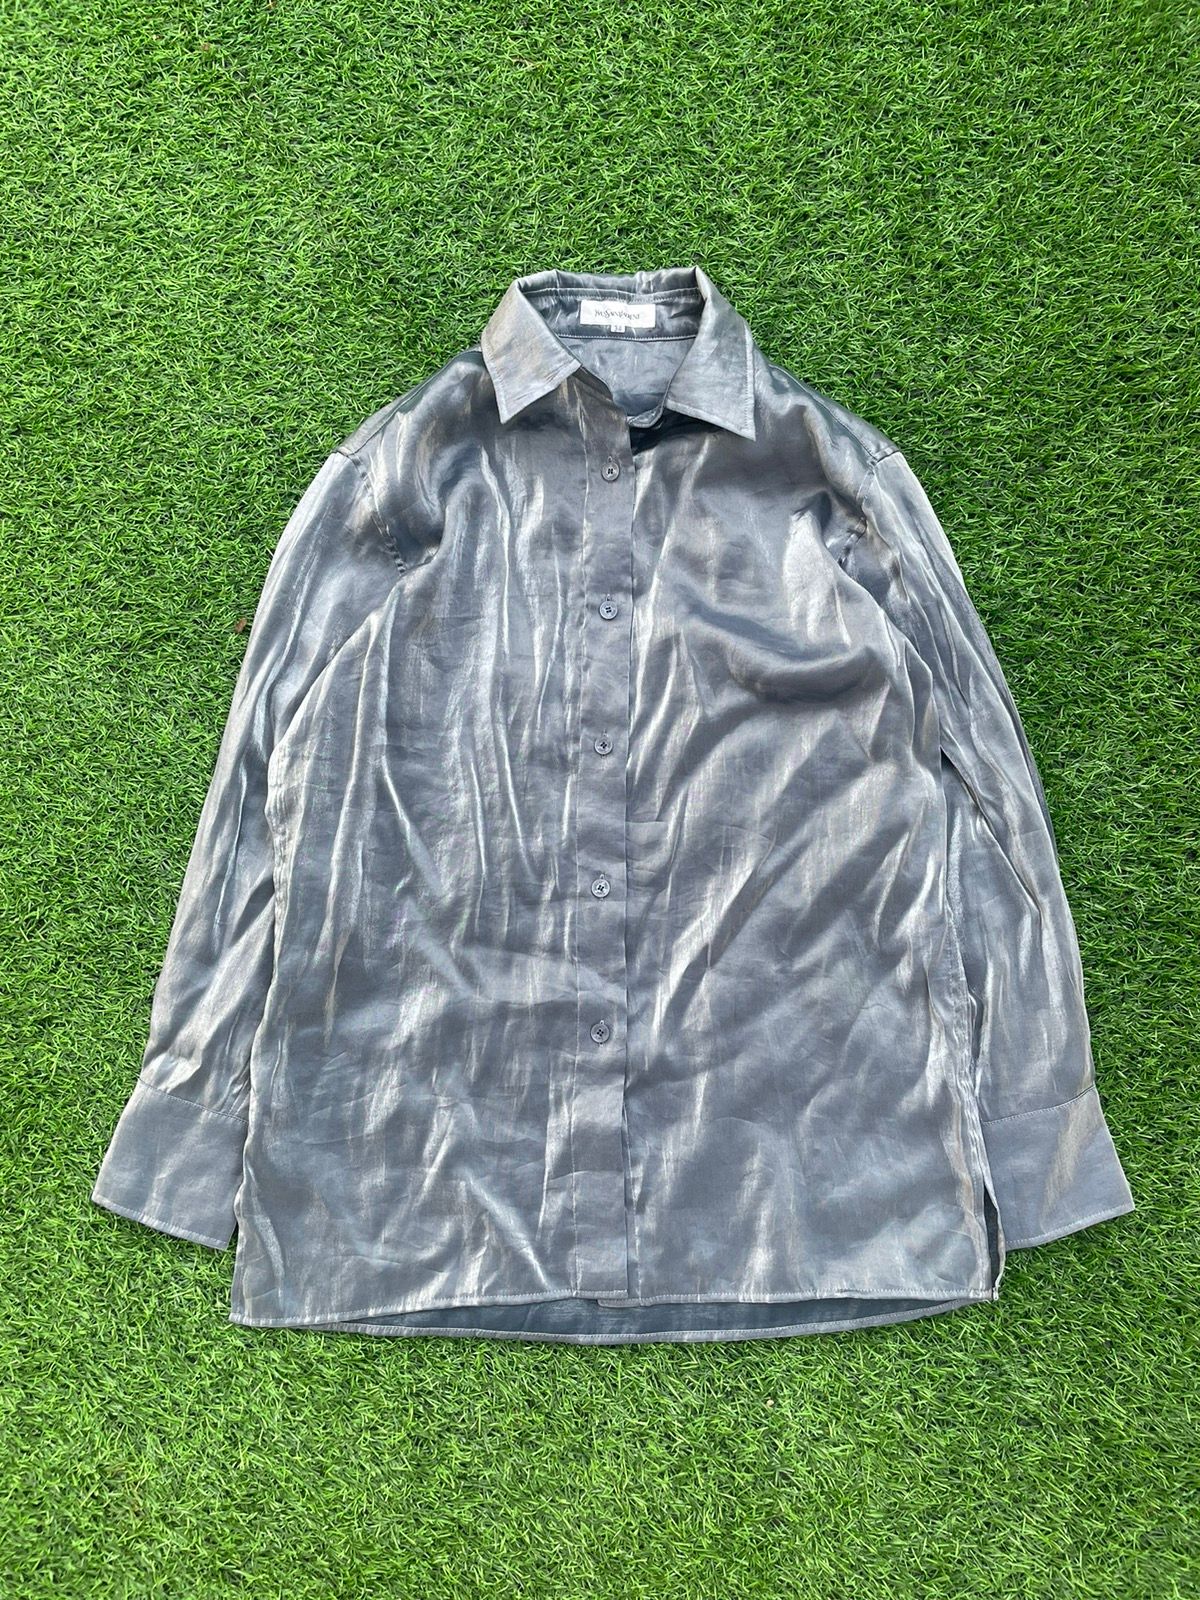 S/S 2002 Yves Saint Laurent Silver Shirt - 1